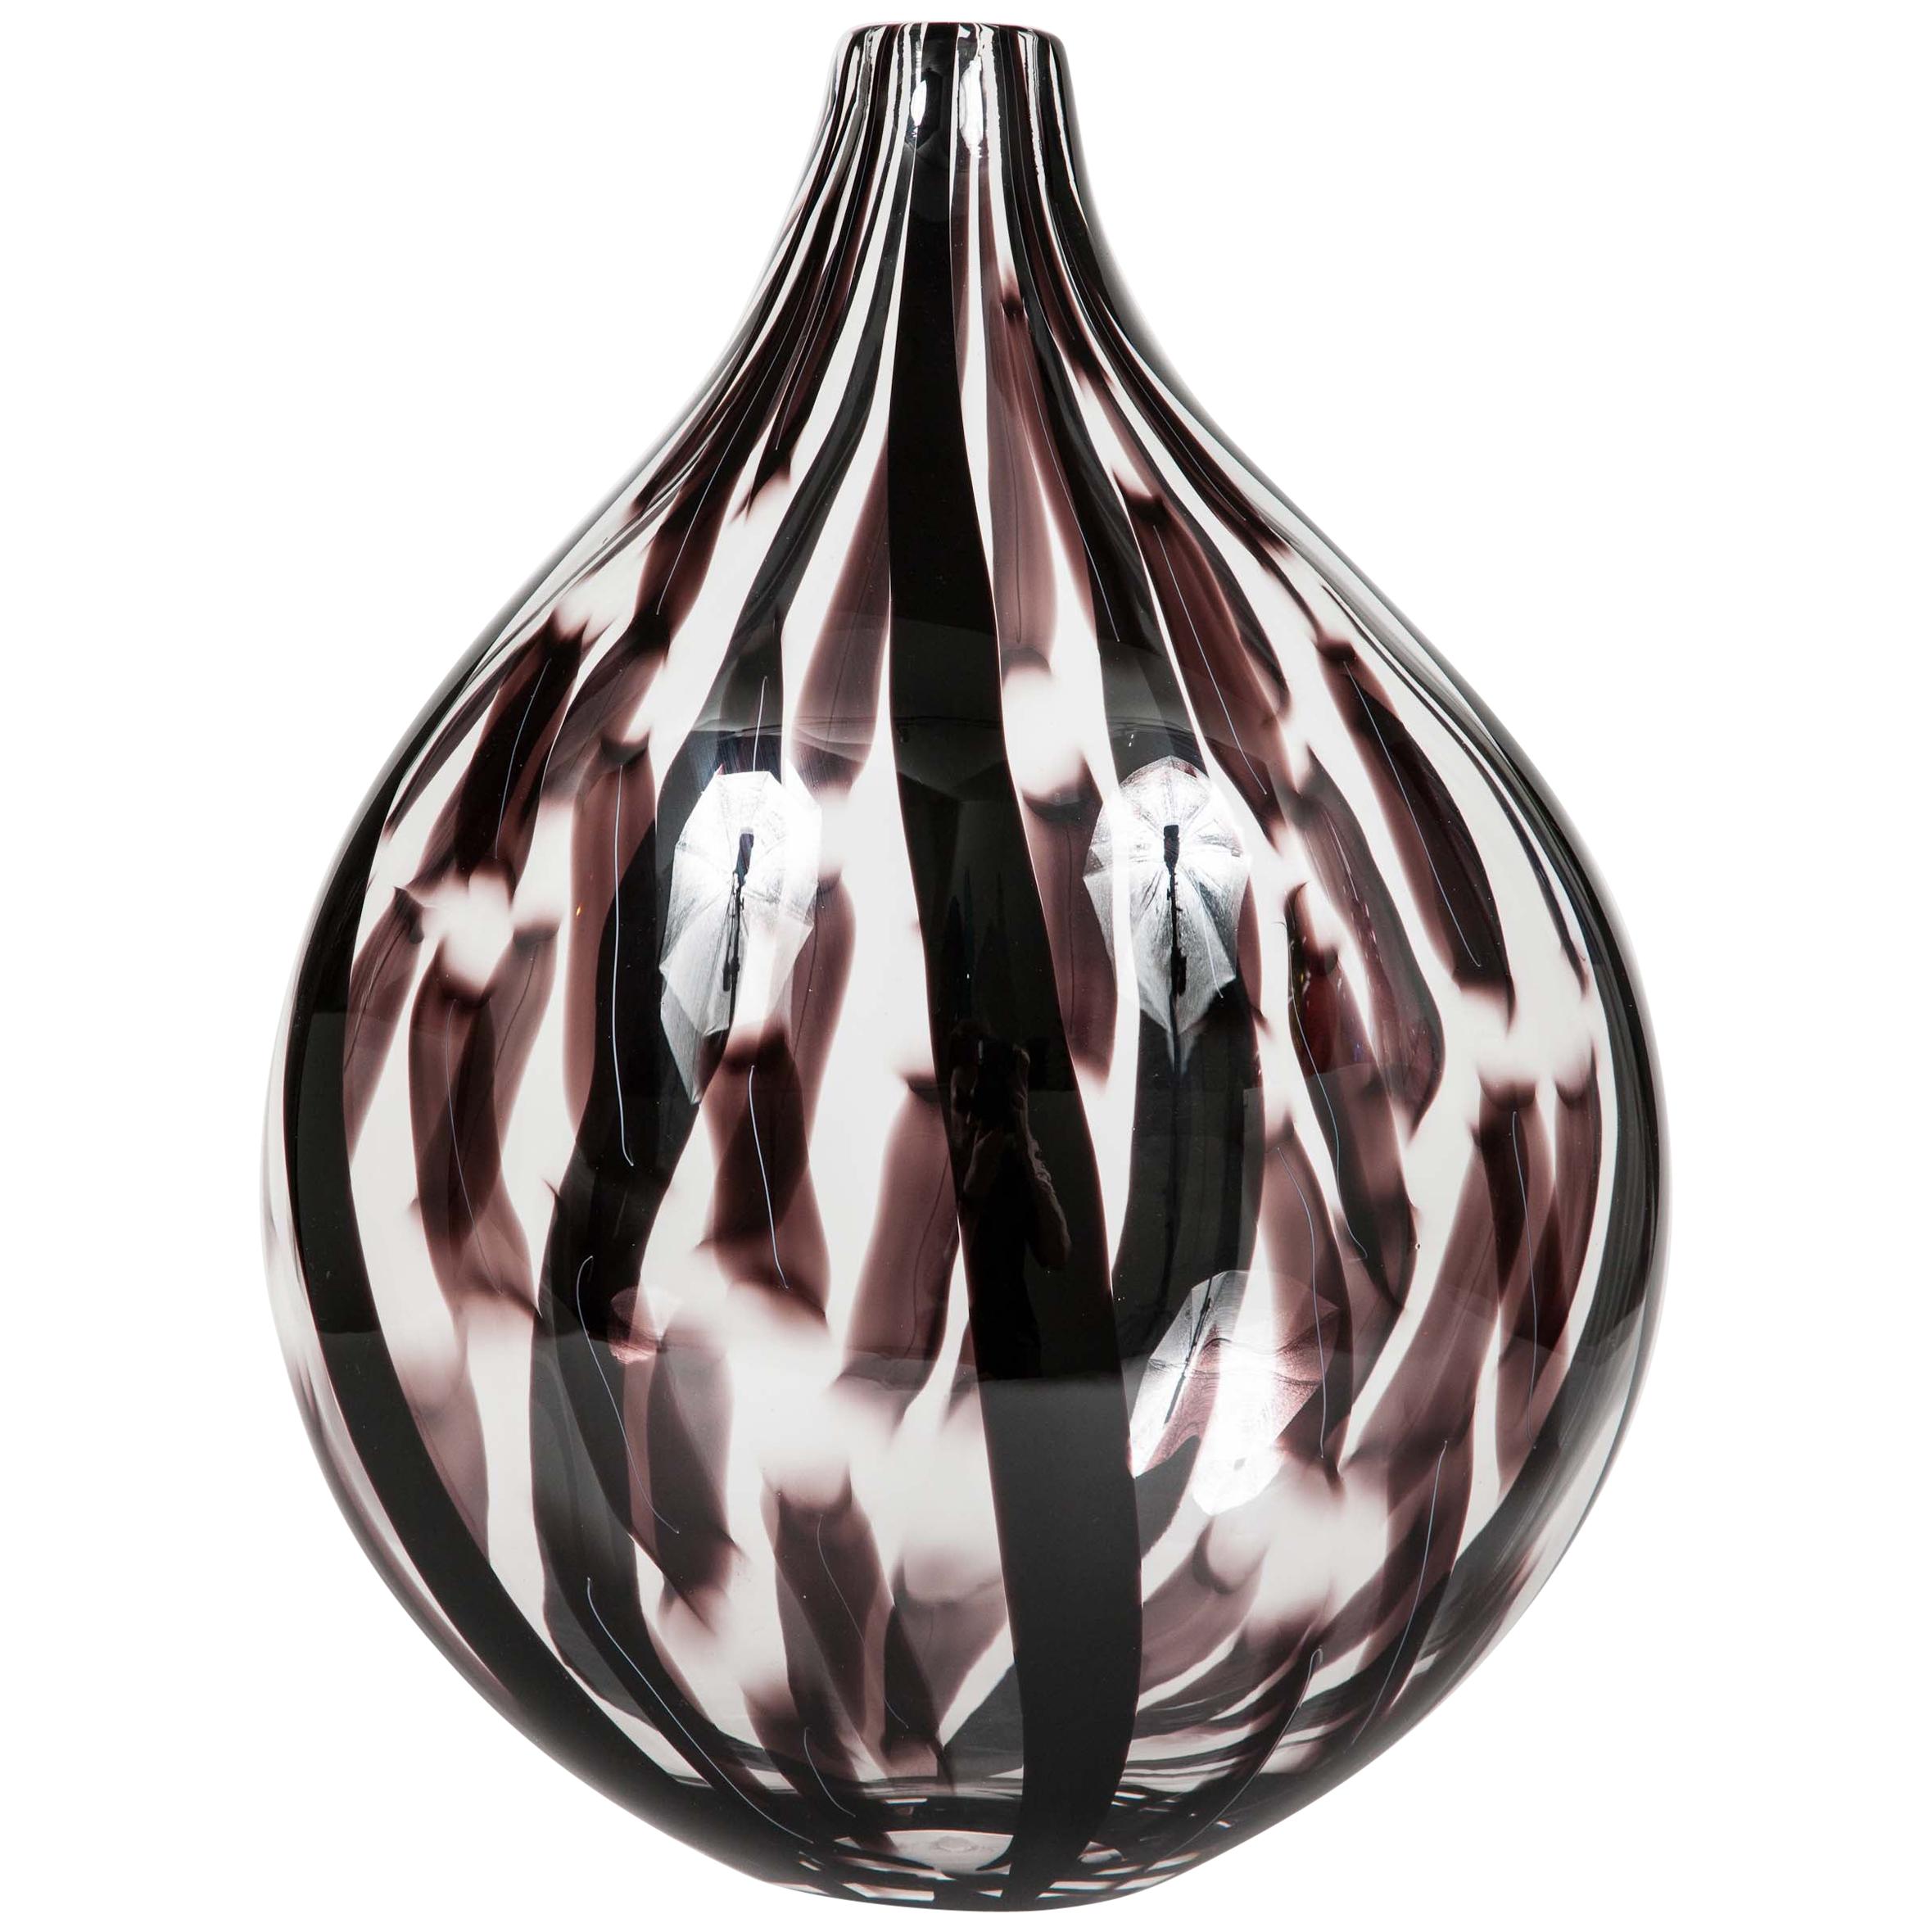 Ikate II, a clear & aubergine / black Glass blown Sculpture by Ann Wåhlström